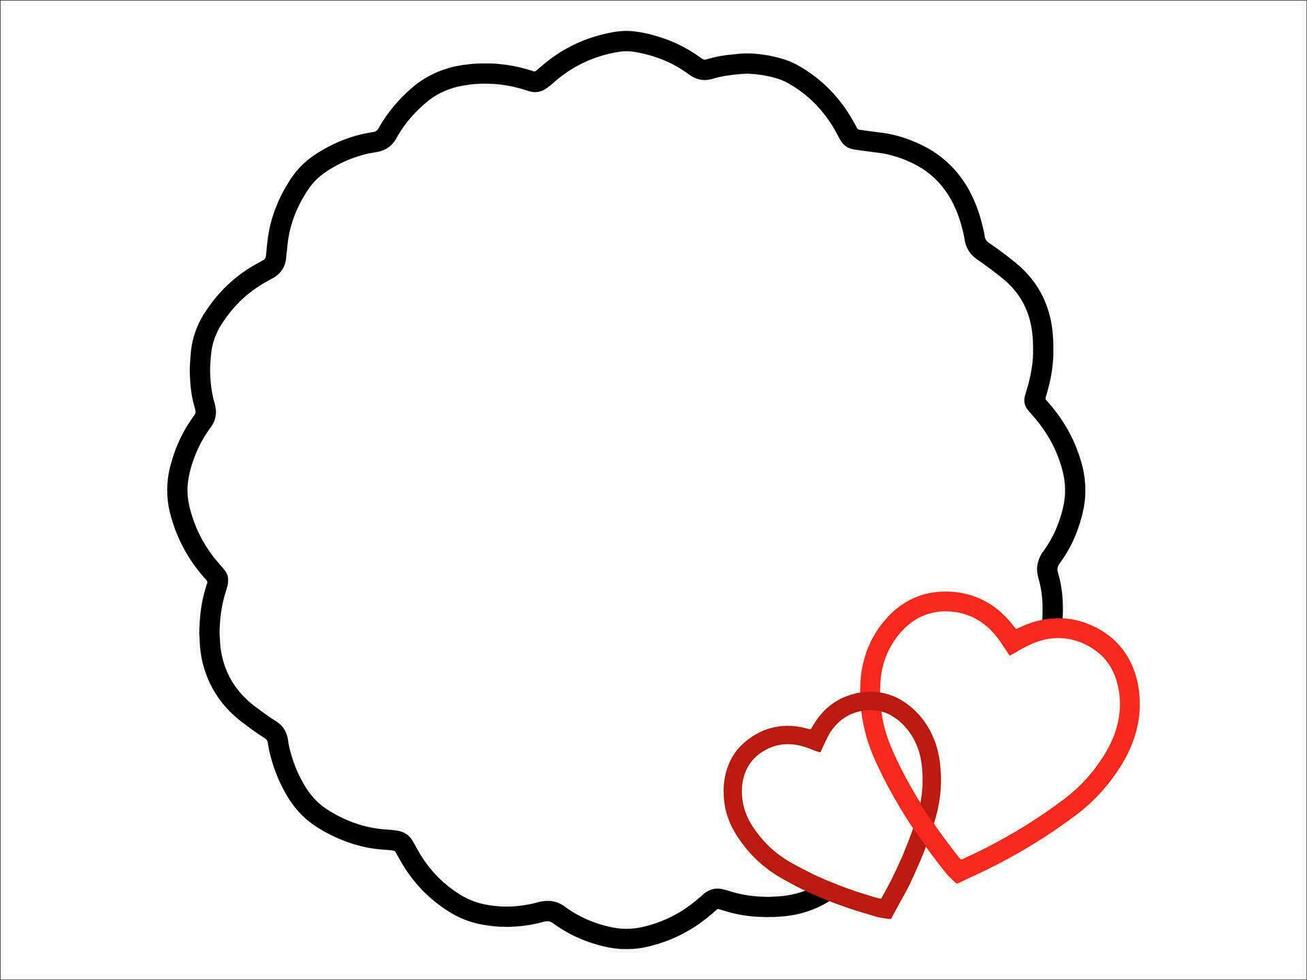 Valentine Frame Heart Background Illustration vector